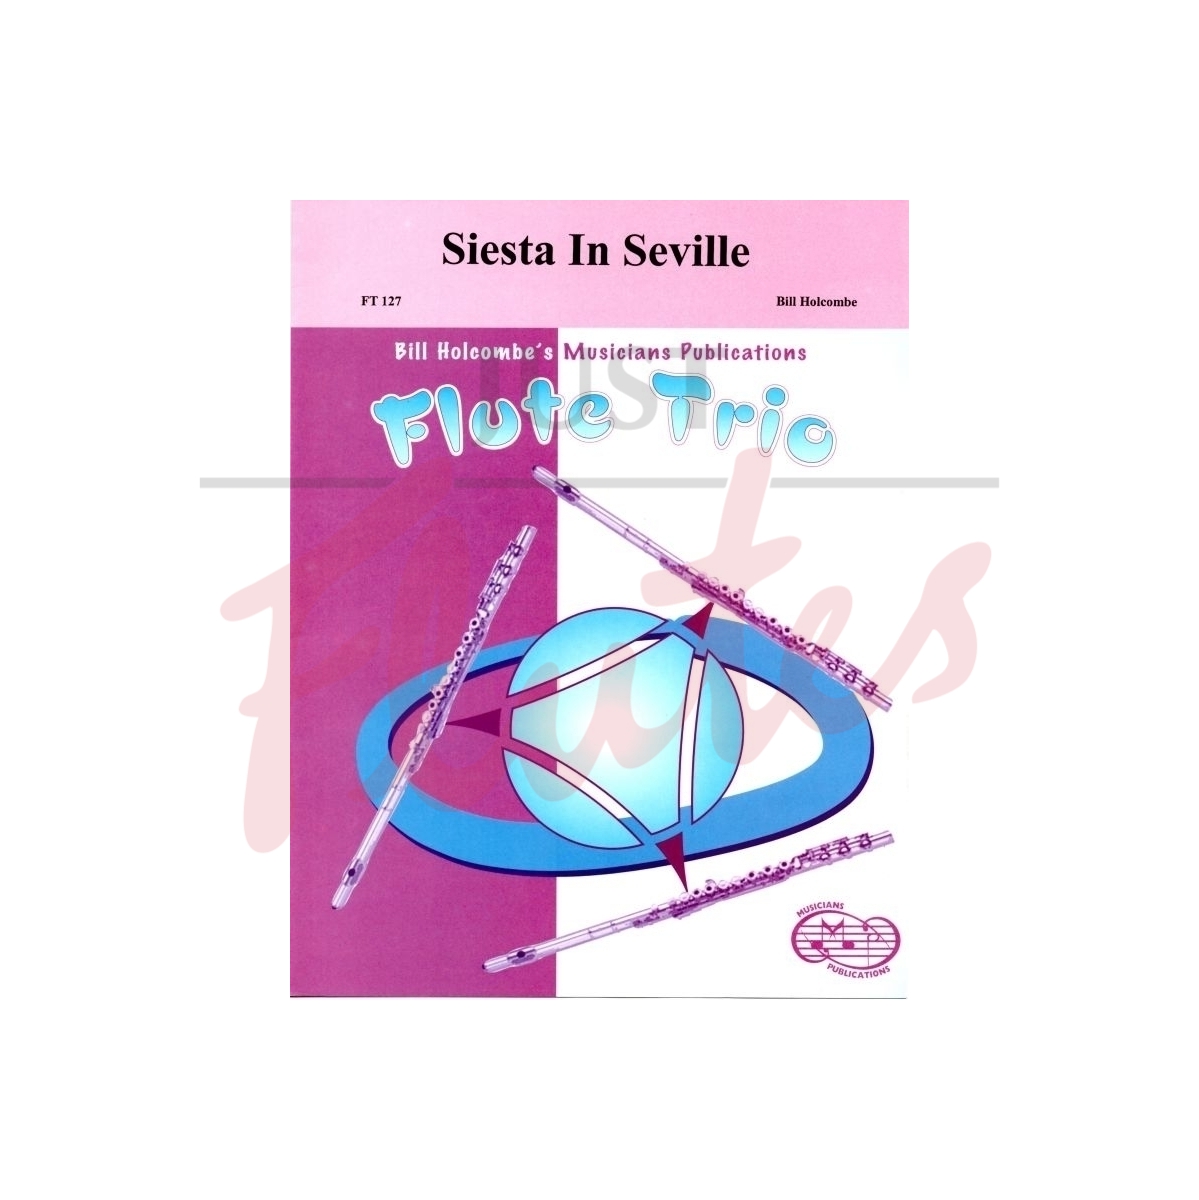 Siesta in Seville [Flute Trio]